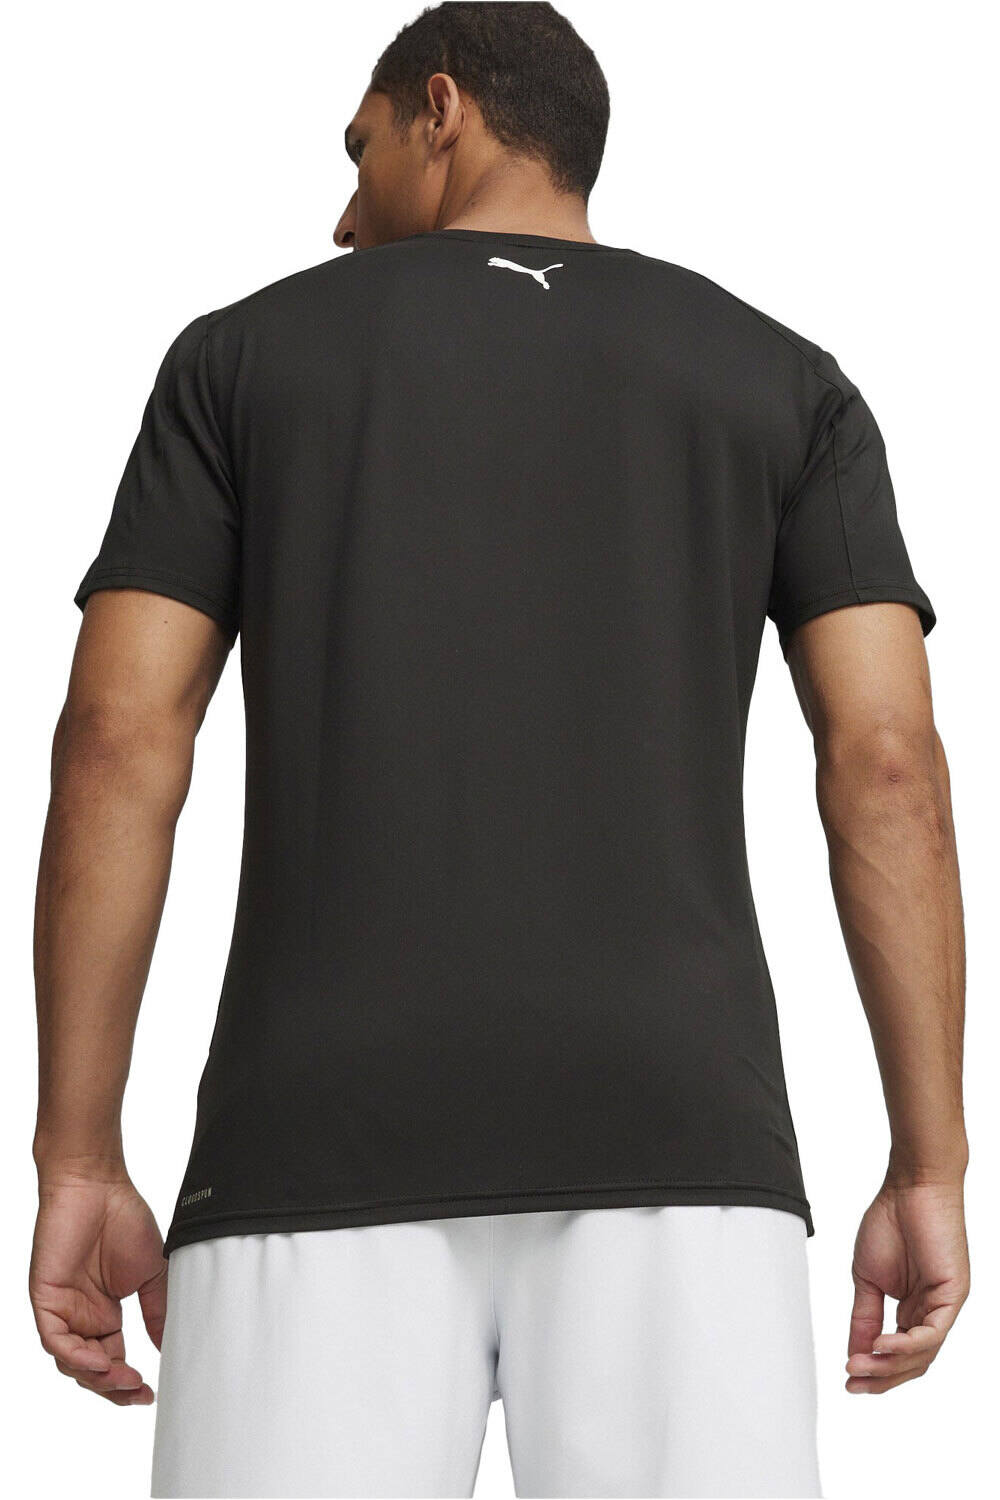 Puma camiseta fitness hombre Cloudspun Engineered for Strength Tee vista trasera